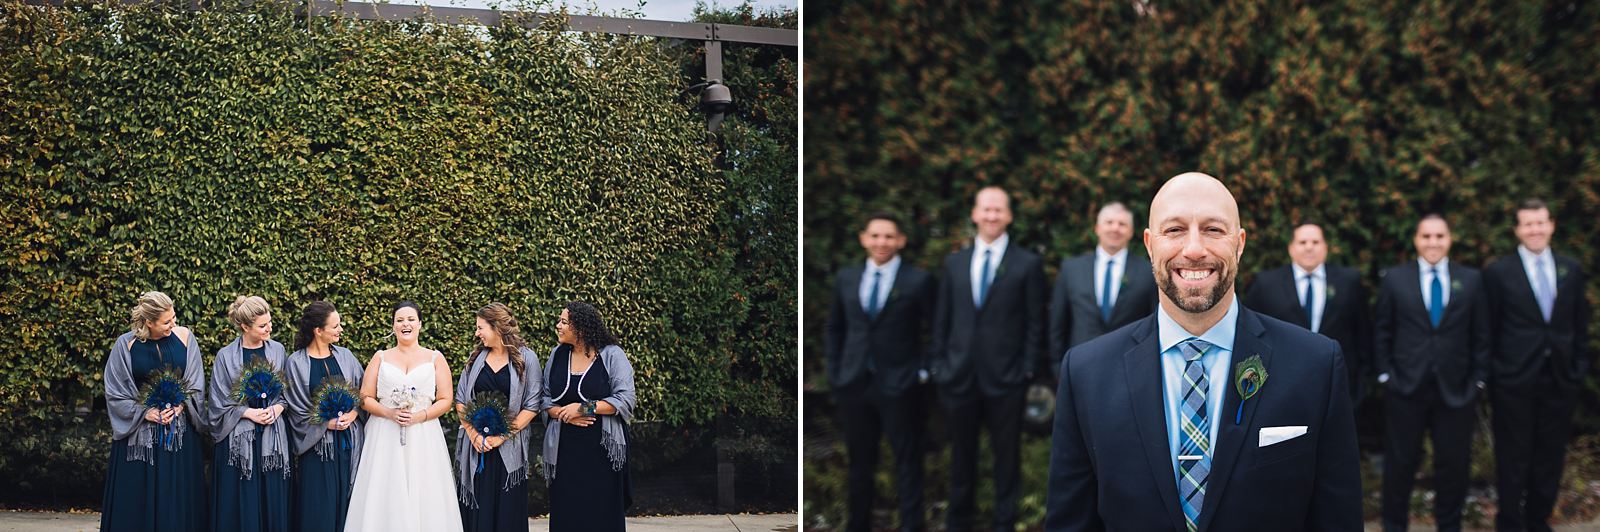 21 bridal party wedding posing inspiration - Salvatores Chicago Wedding Photos // Jen + Bob